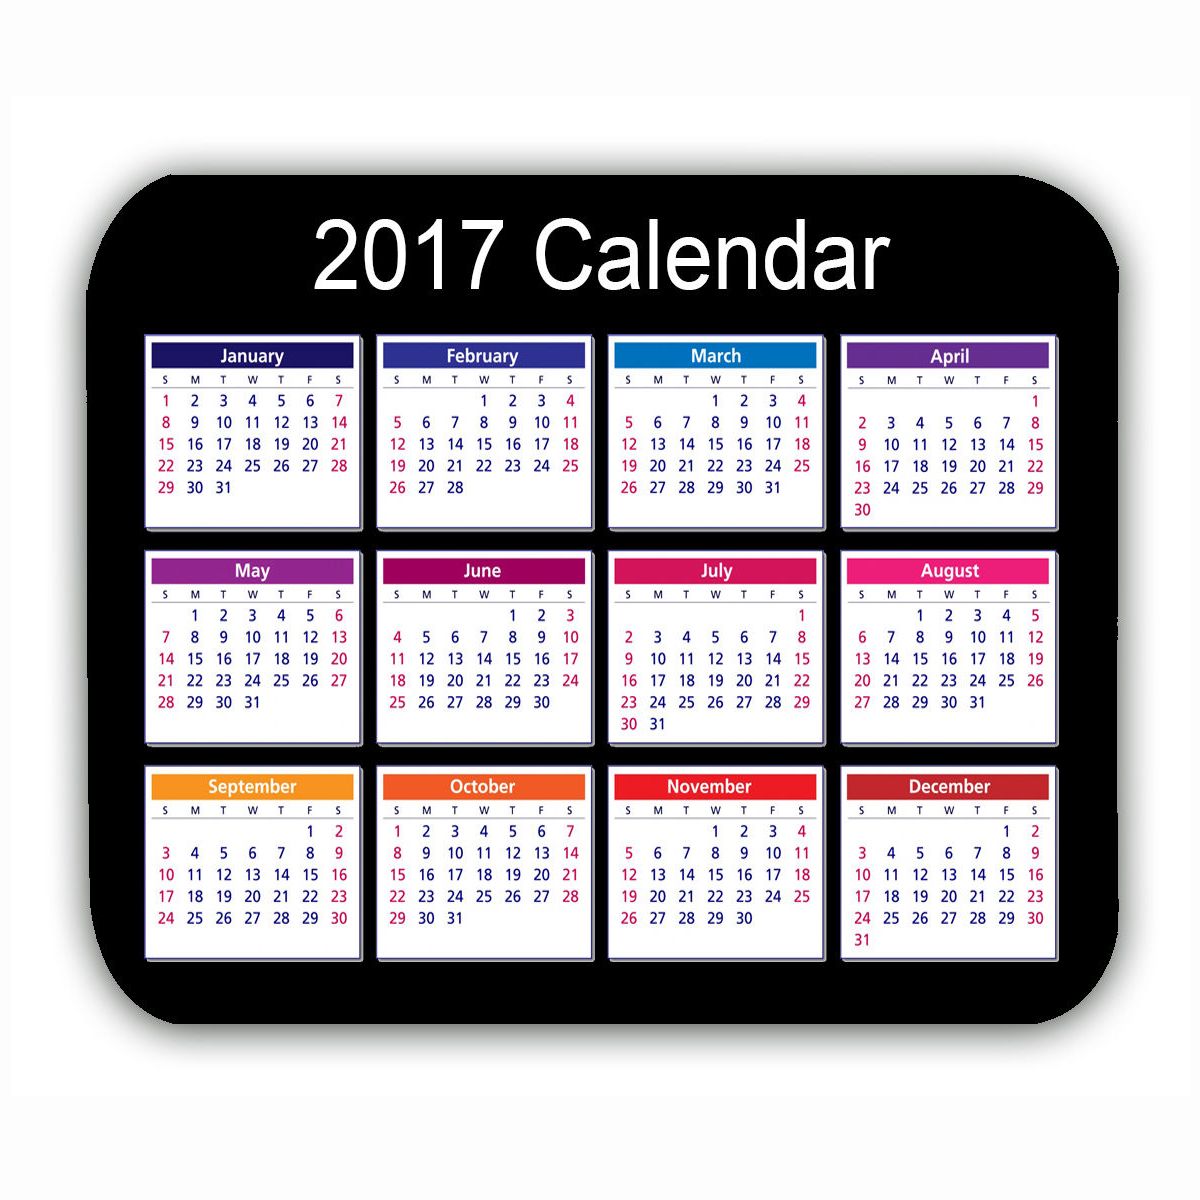 Calendar-2017-Mouse-Mat-Black-Anti-Slip-Computer-PC-Desktop-Gaming-Mouse-Pad-1119632